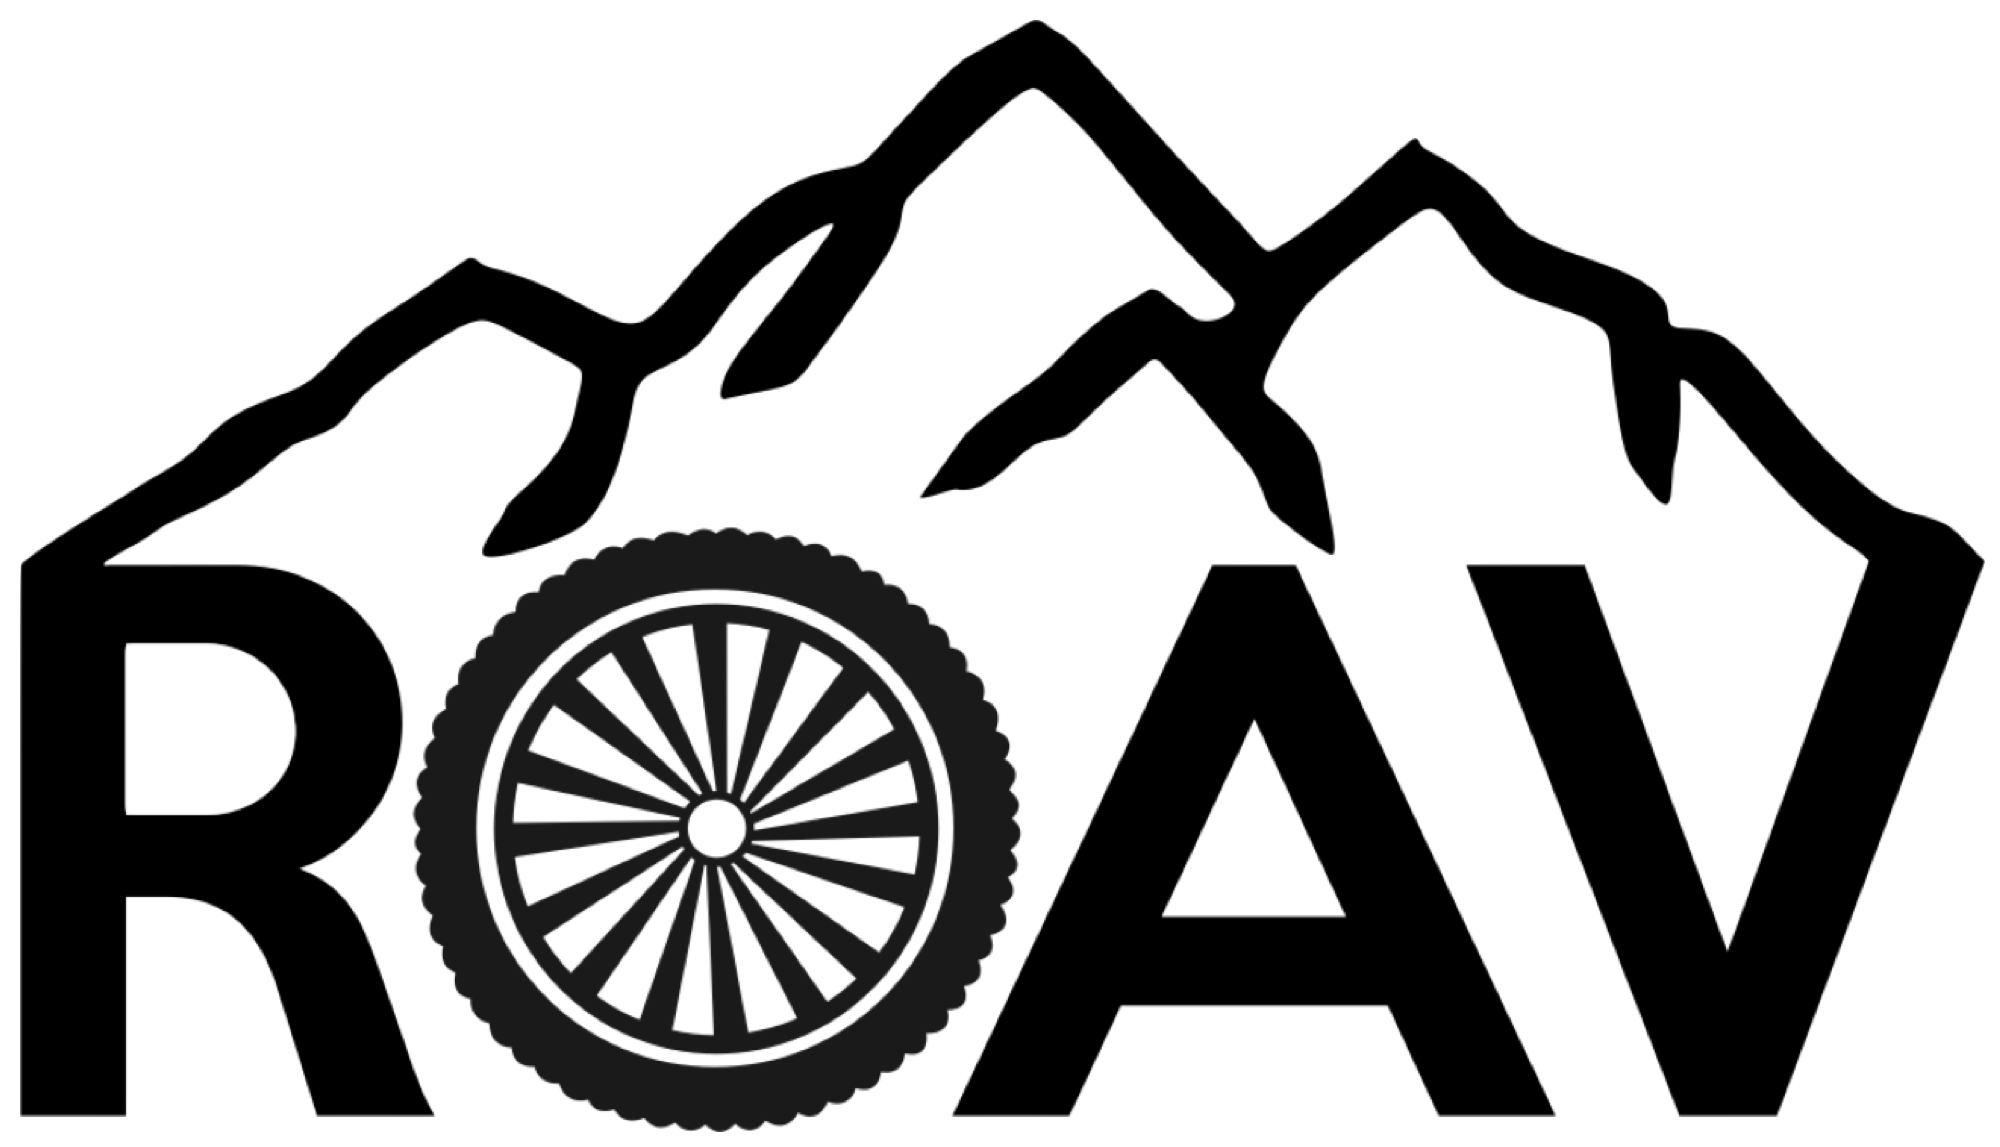 ROAV - Riders of the Alberni Valley logo